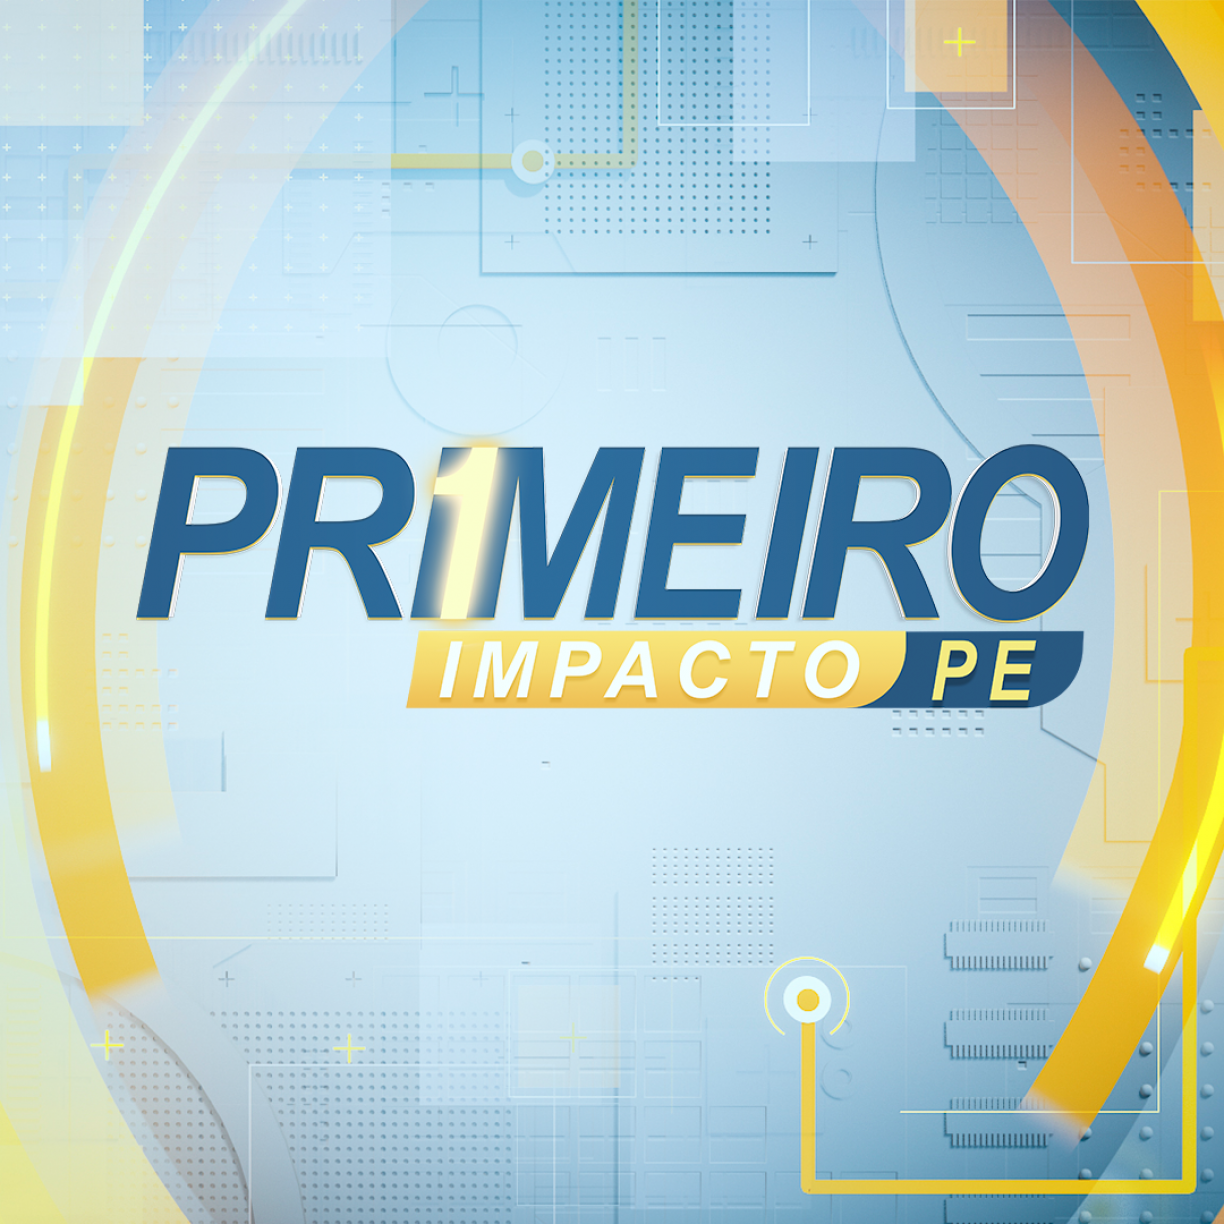 PRIMEIRO IMPACTO PE